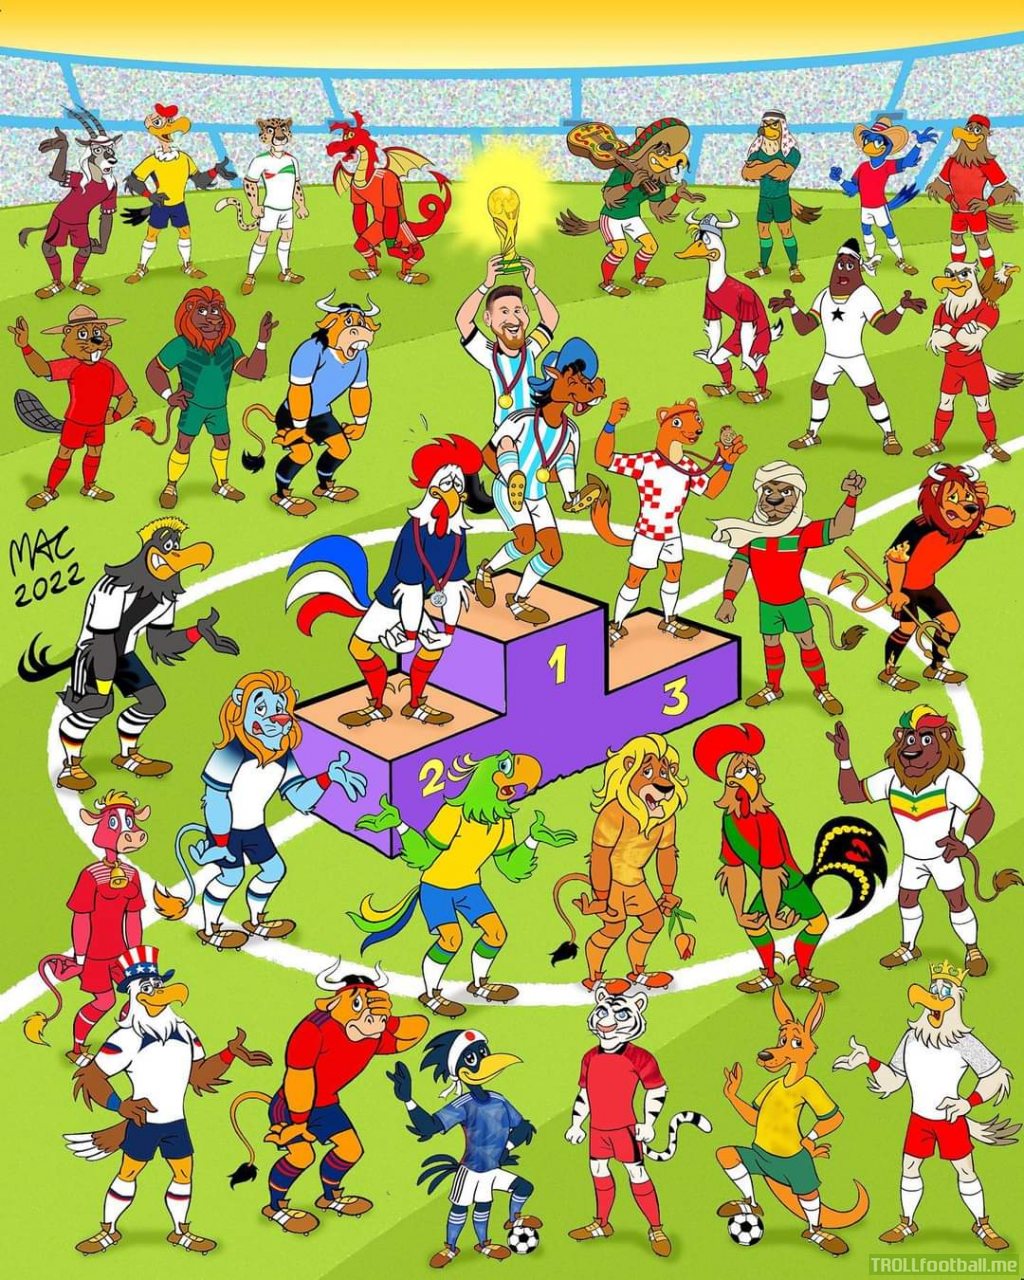 Gazzetta illustration on the World Cup